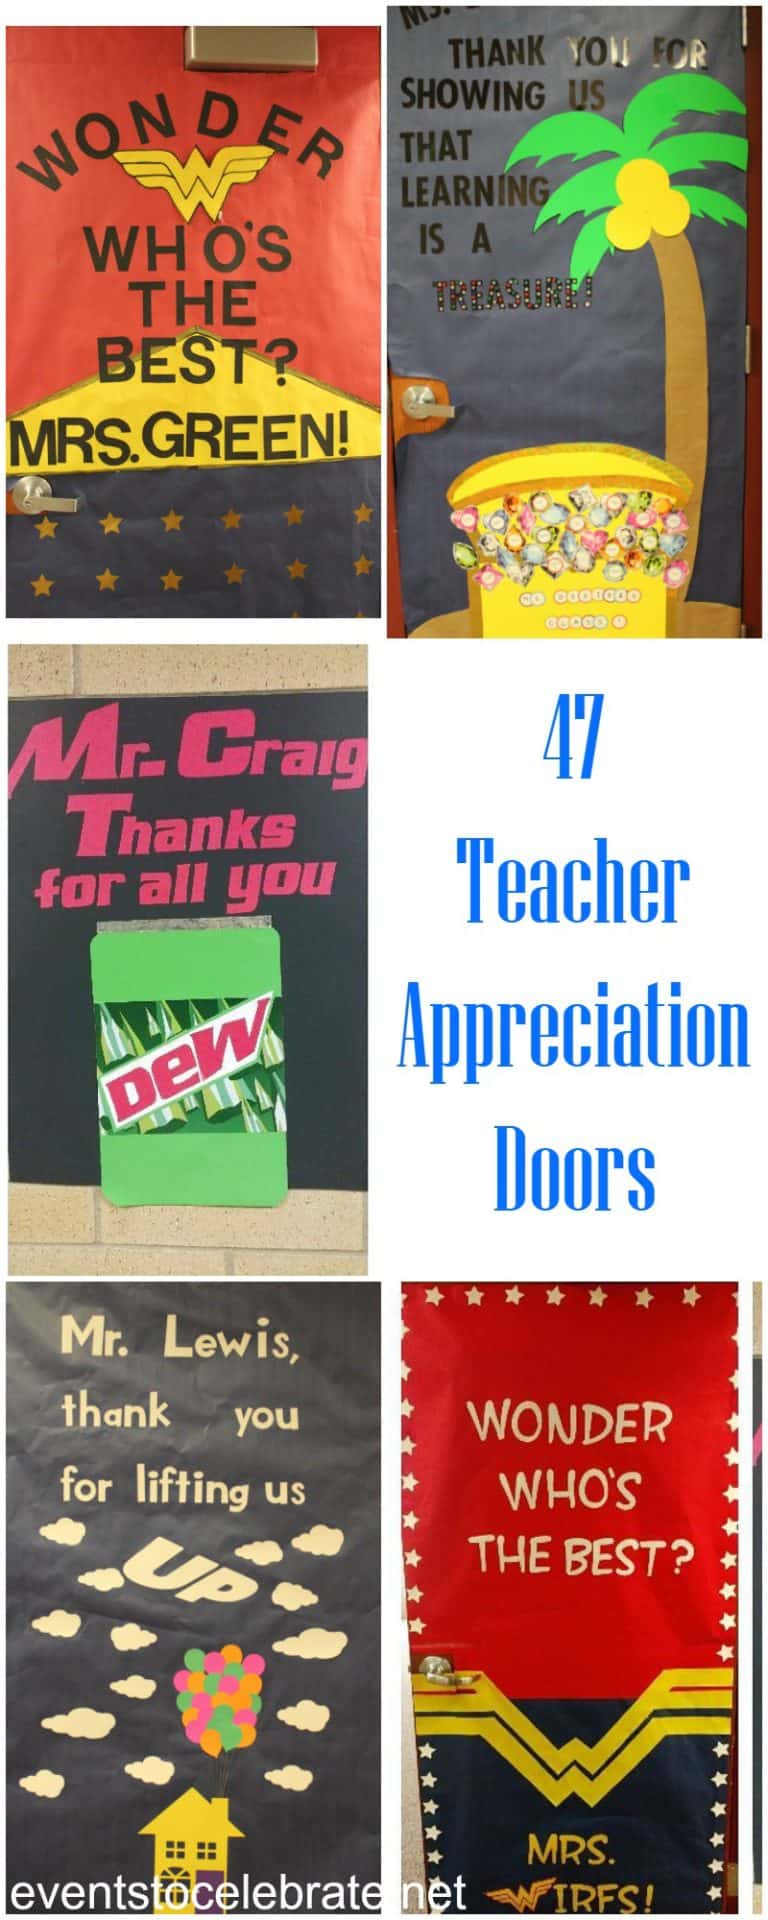 47 Teacher Appreciation Doors